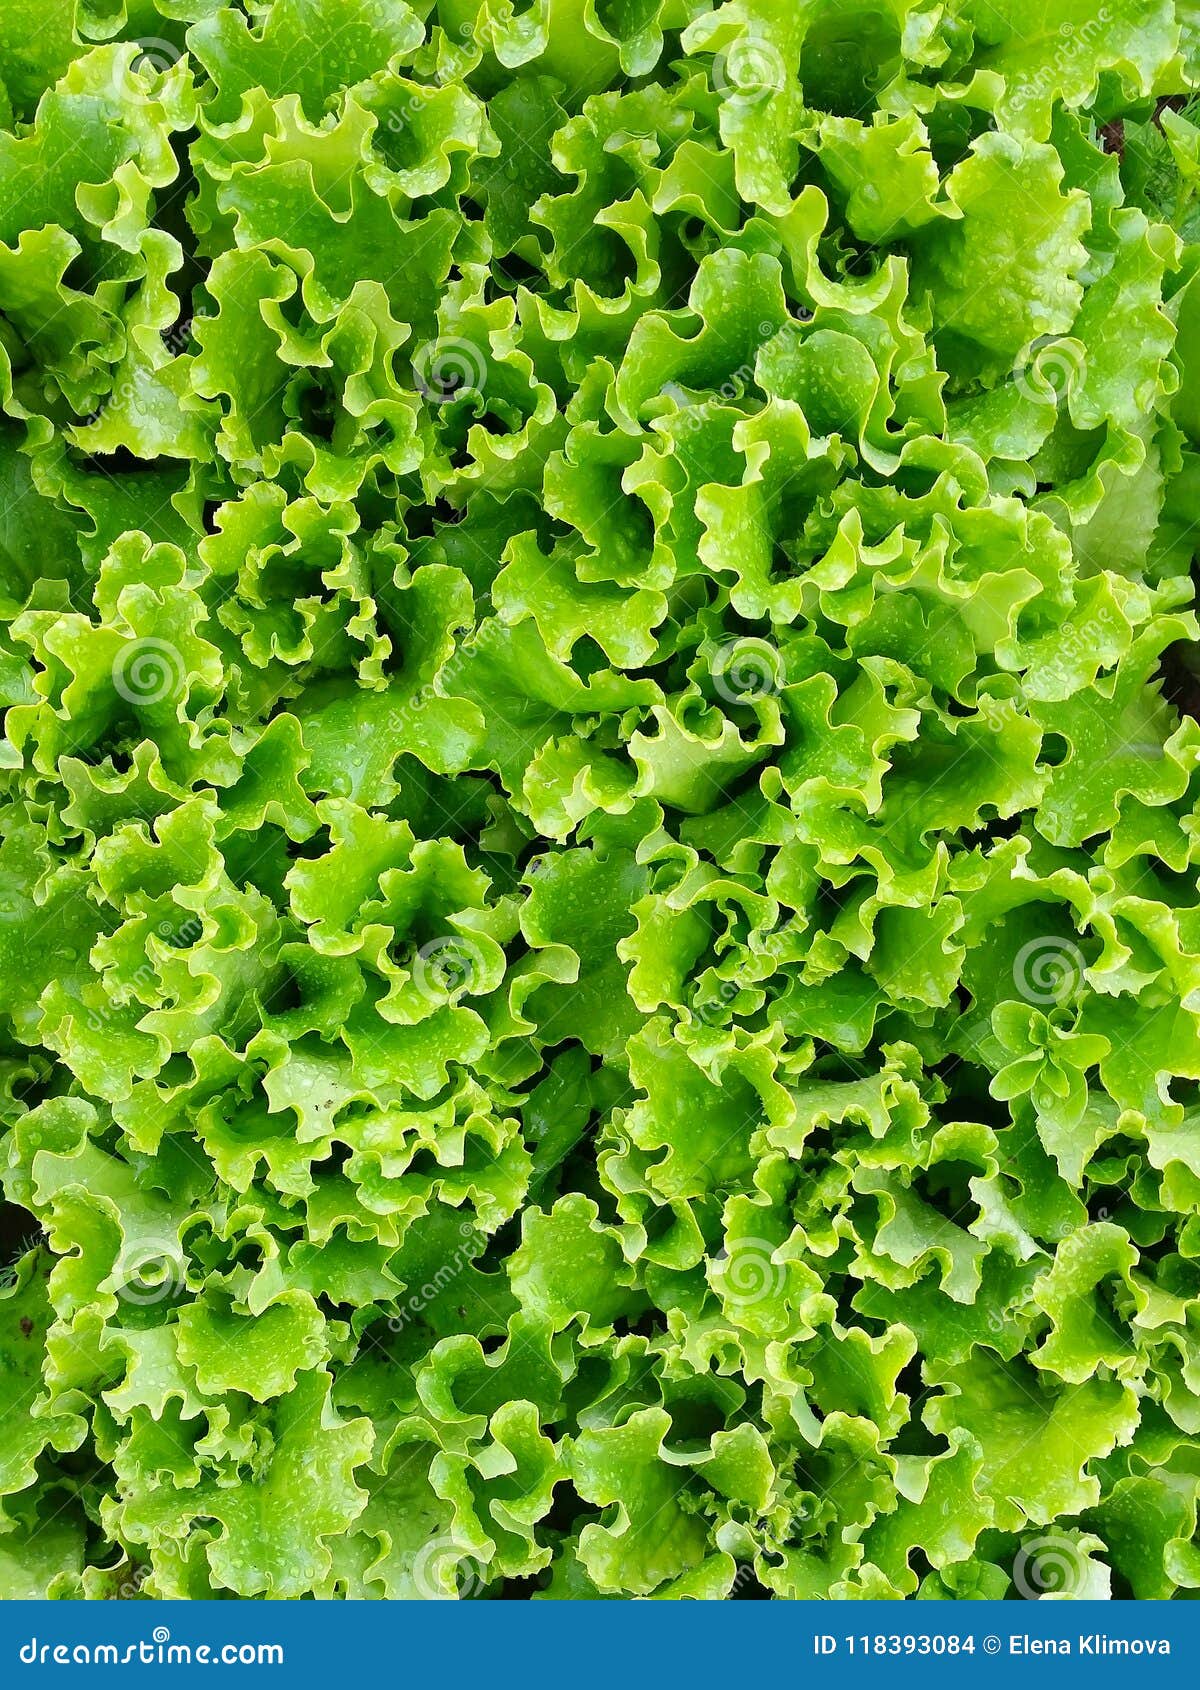 lettuce salad greenbackground foliage leaves